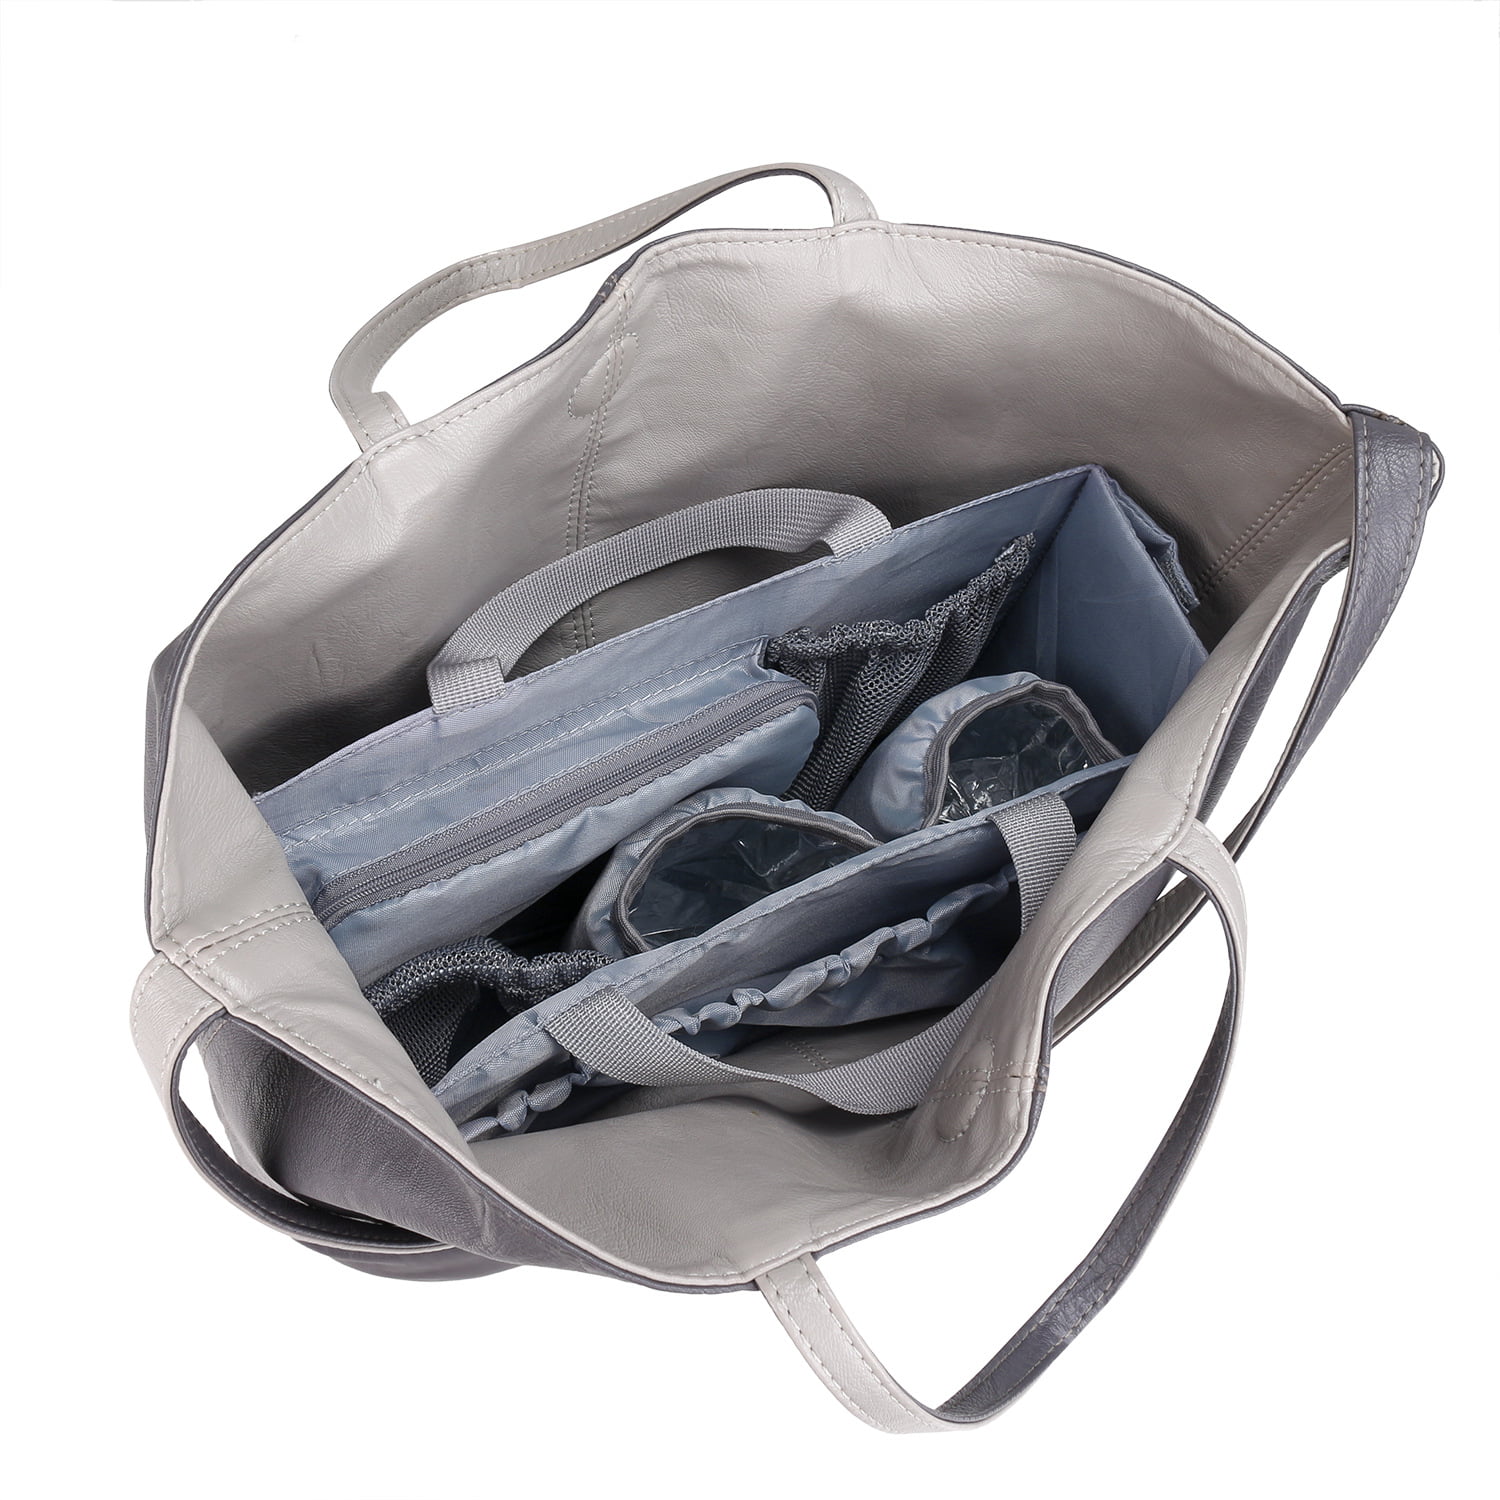 Diaper Bag Organizer Insert for sale